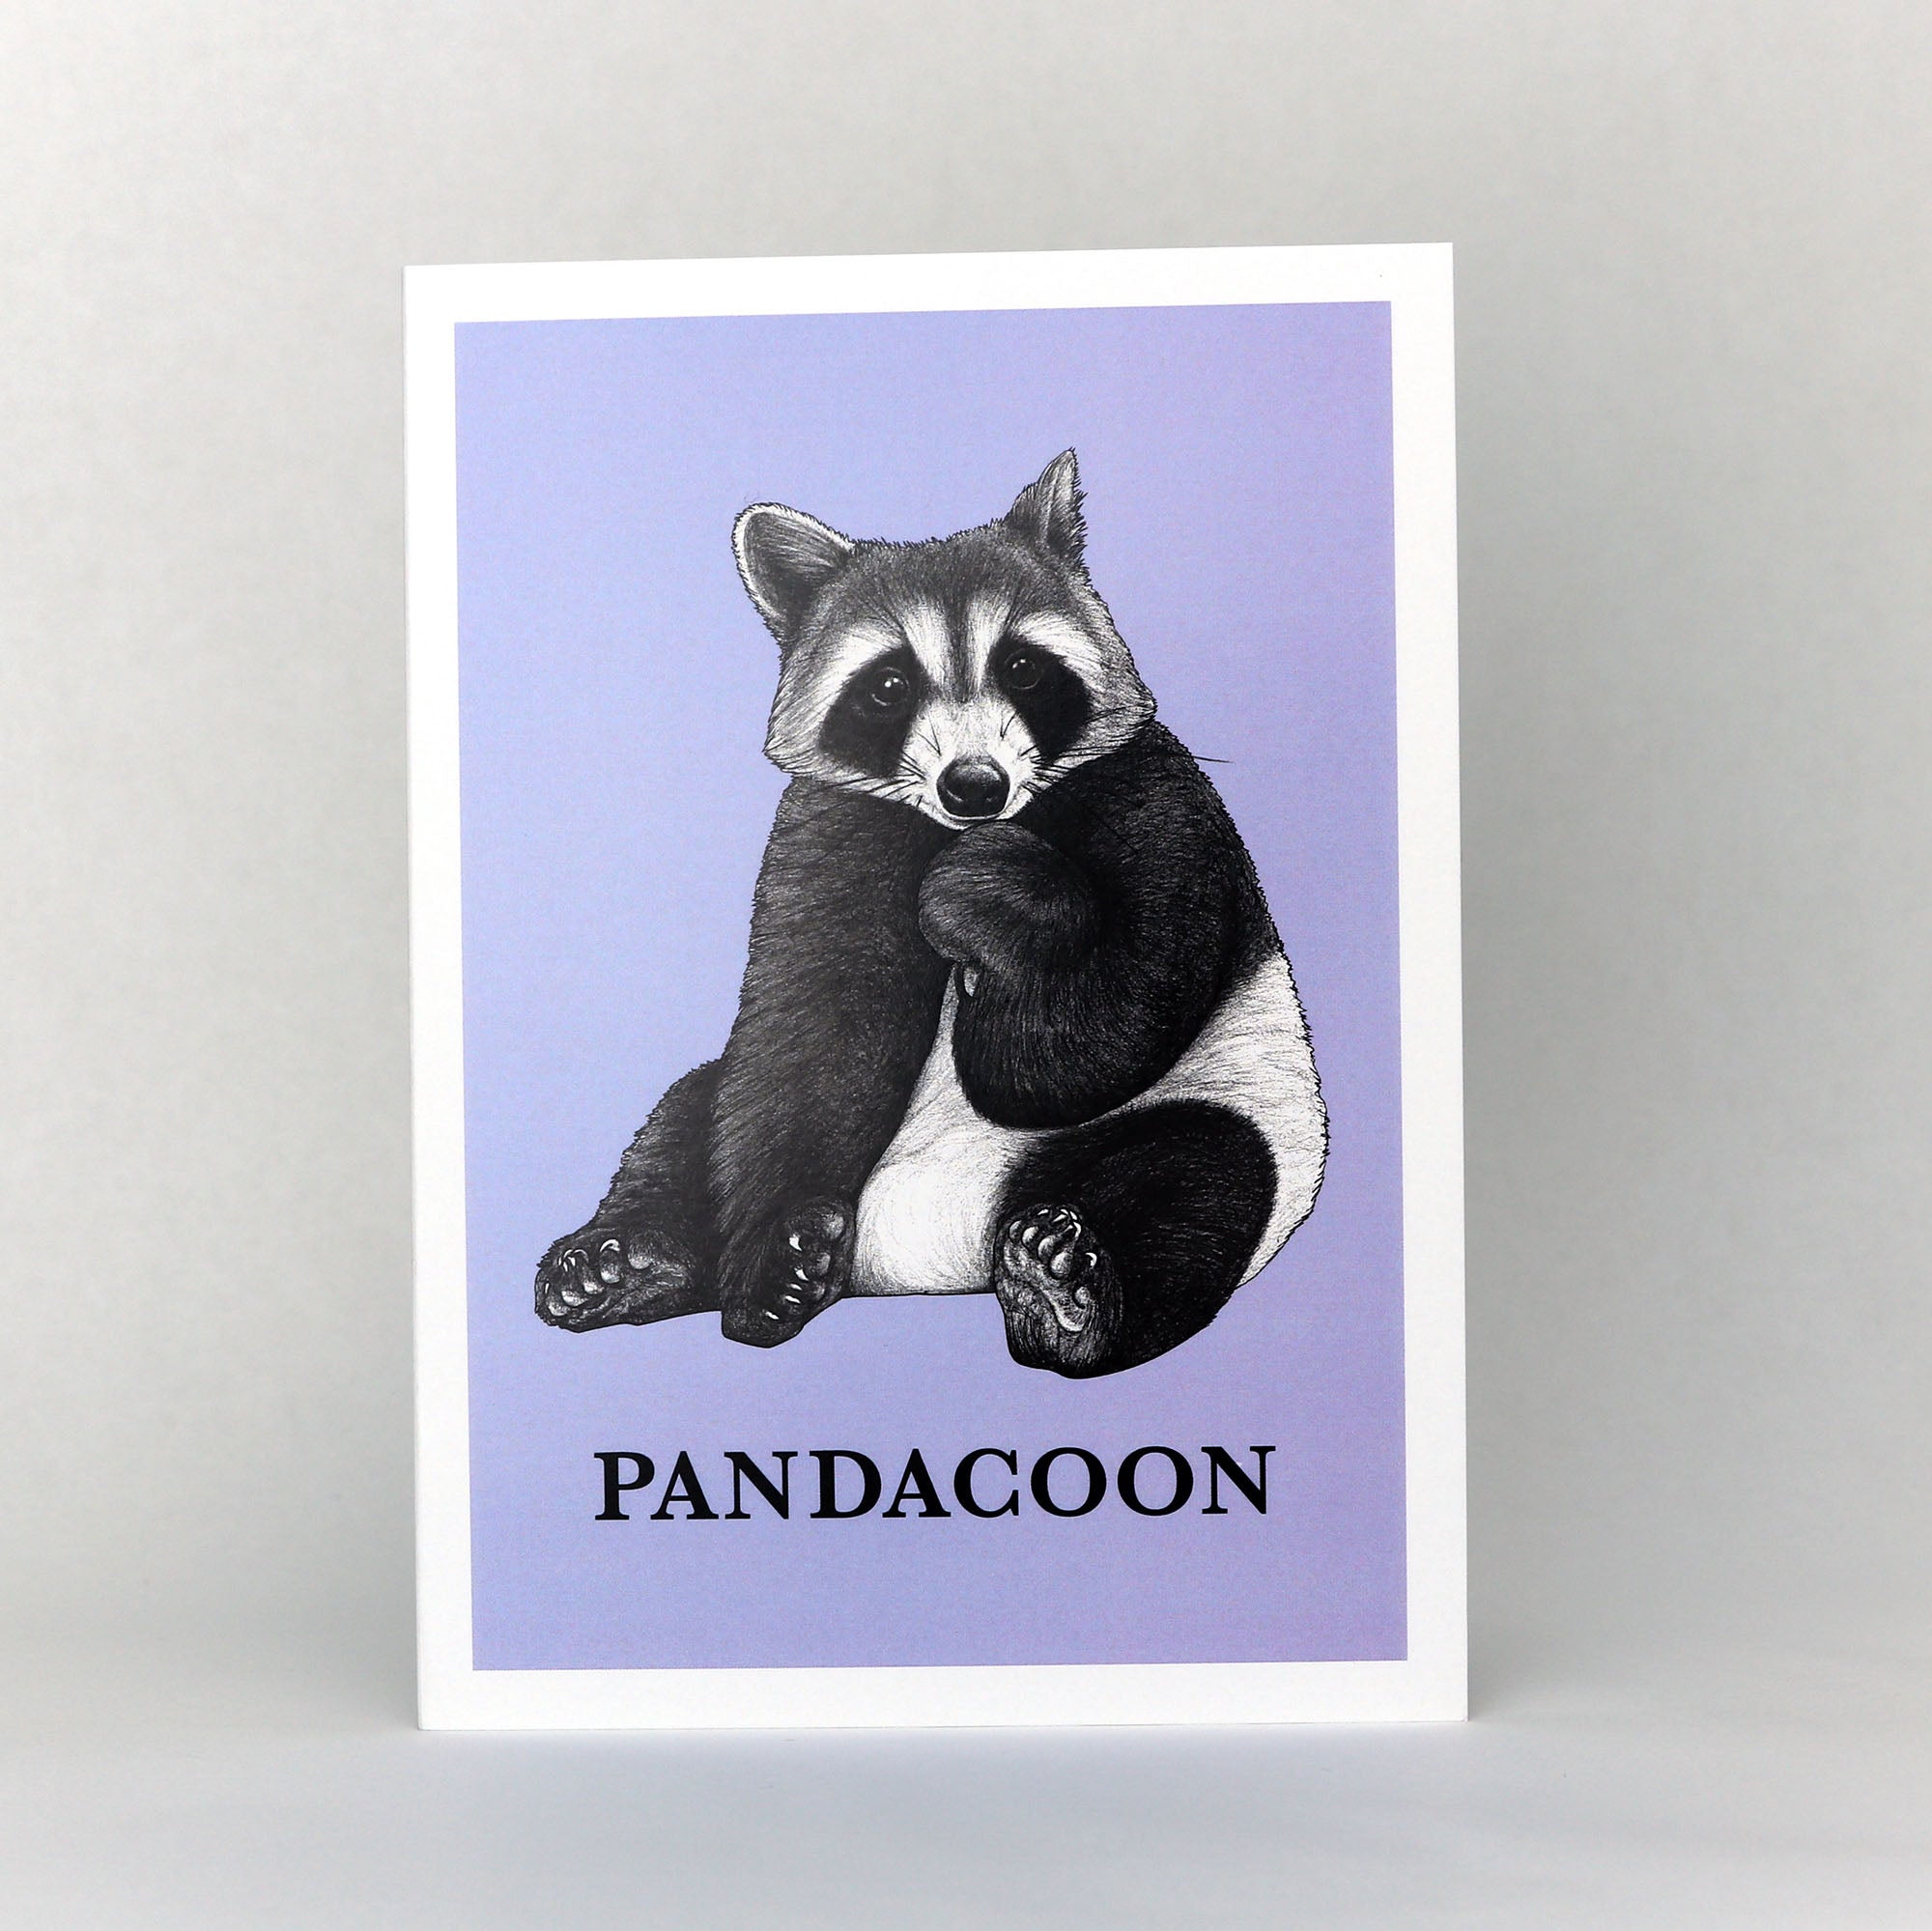 Pandacoon | Panda + Raccoon Hybrid Animal | 5x7" Greeting Card